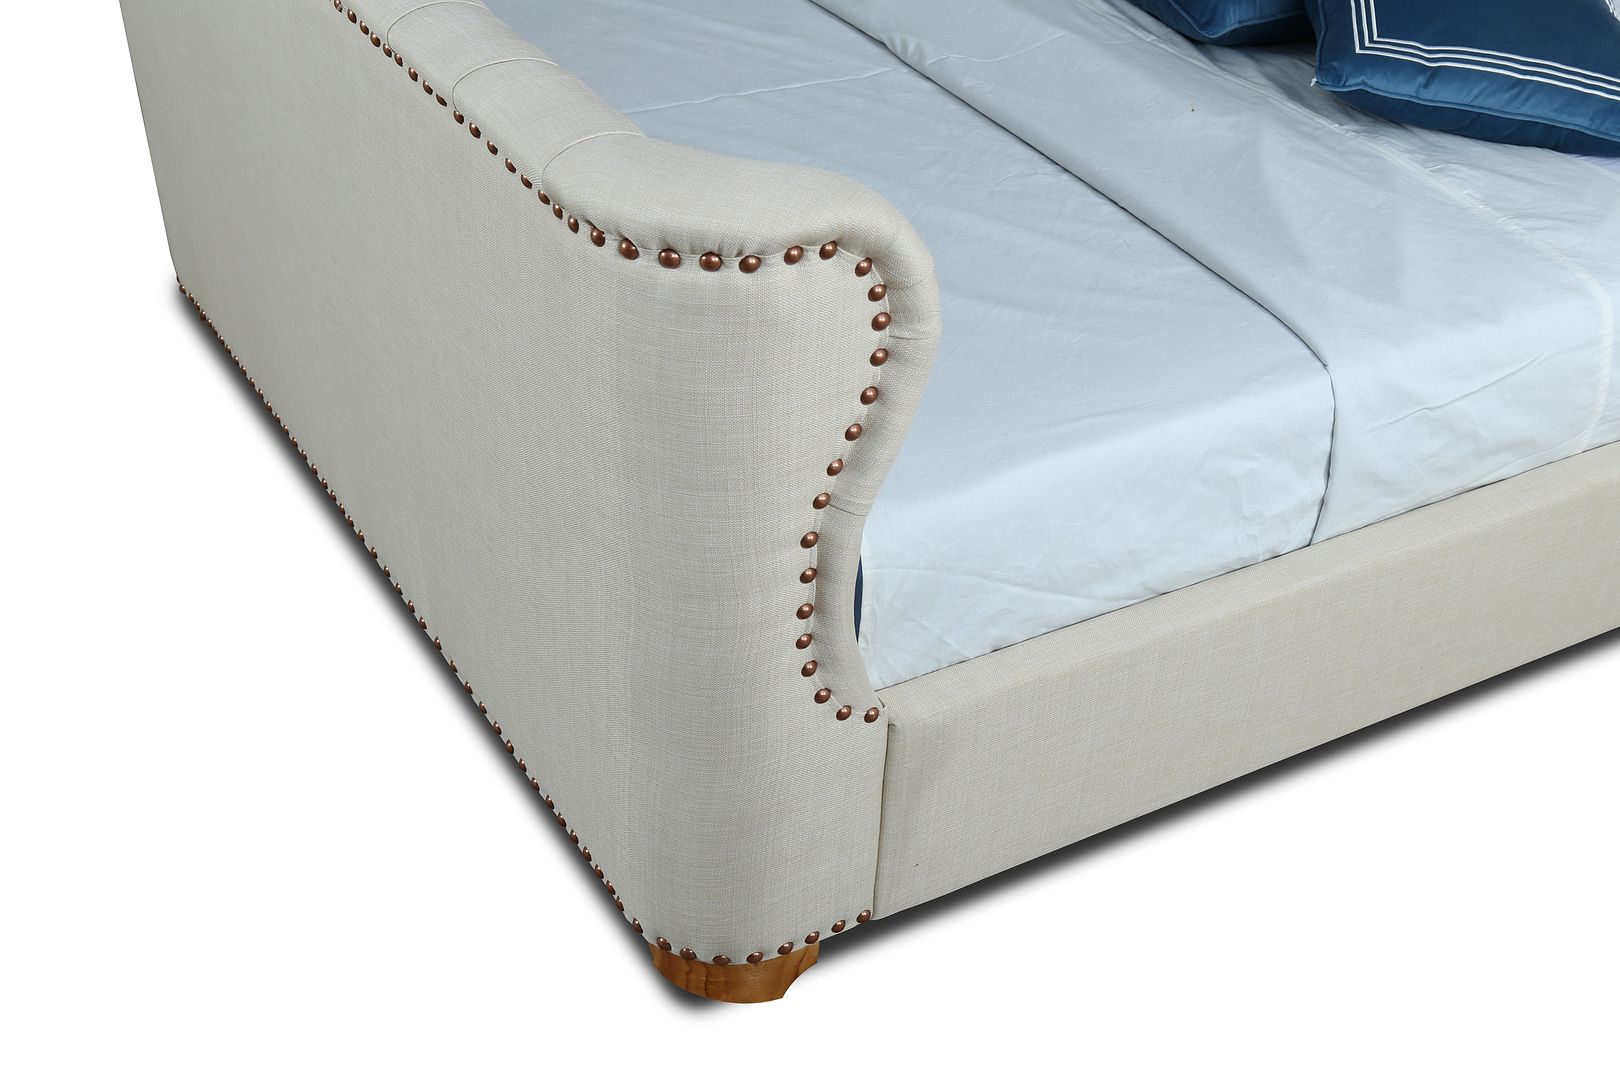 Lola Linen Upholstered Platform Bed Frame - East Shore Modern Home Furnishings